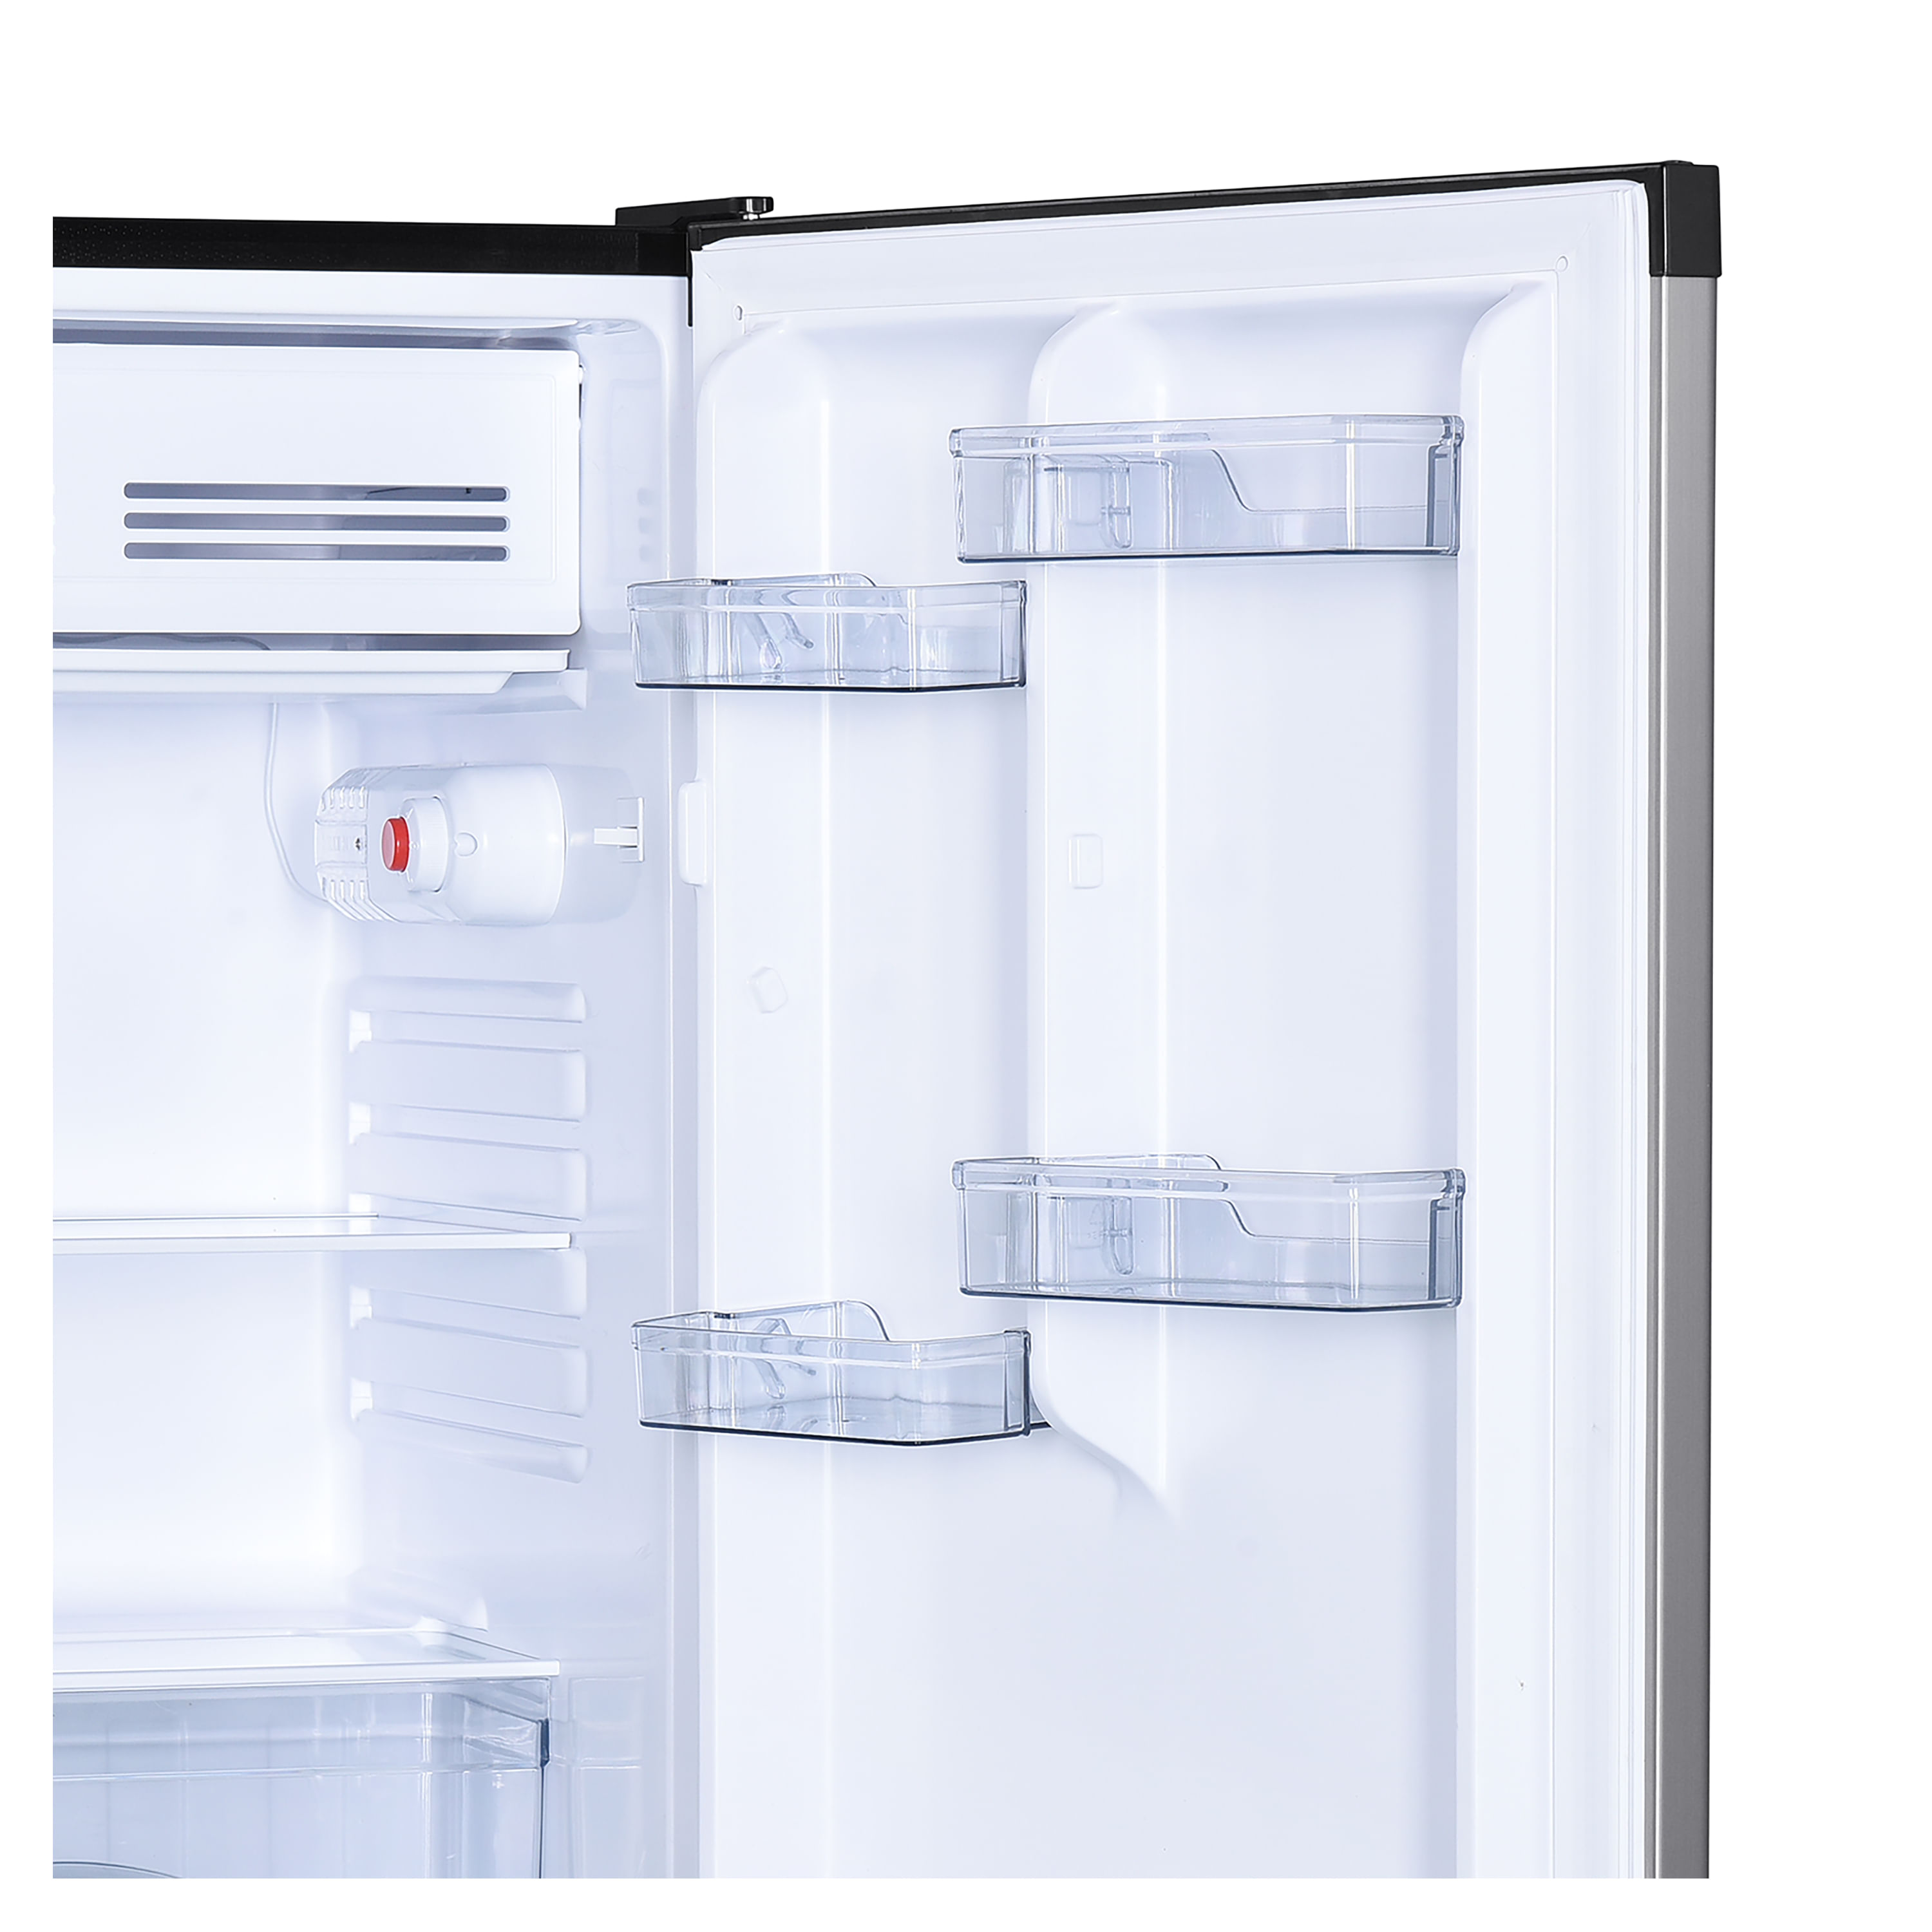 Refrigeradora No Frost Oster 425 Litros 15 Pies Cubicos Silver 2 Puertas  Luz Led Manija Externa Display Exterior Bandejas De Vidrio Templado